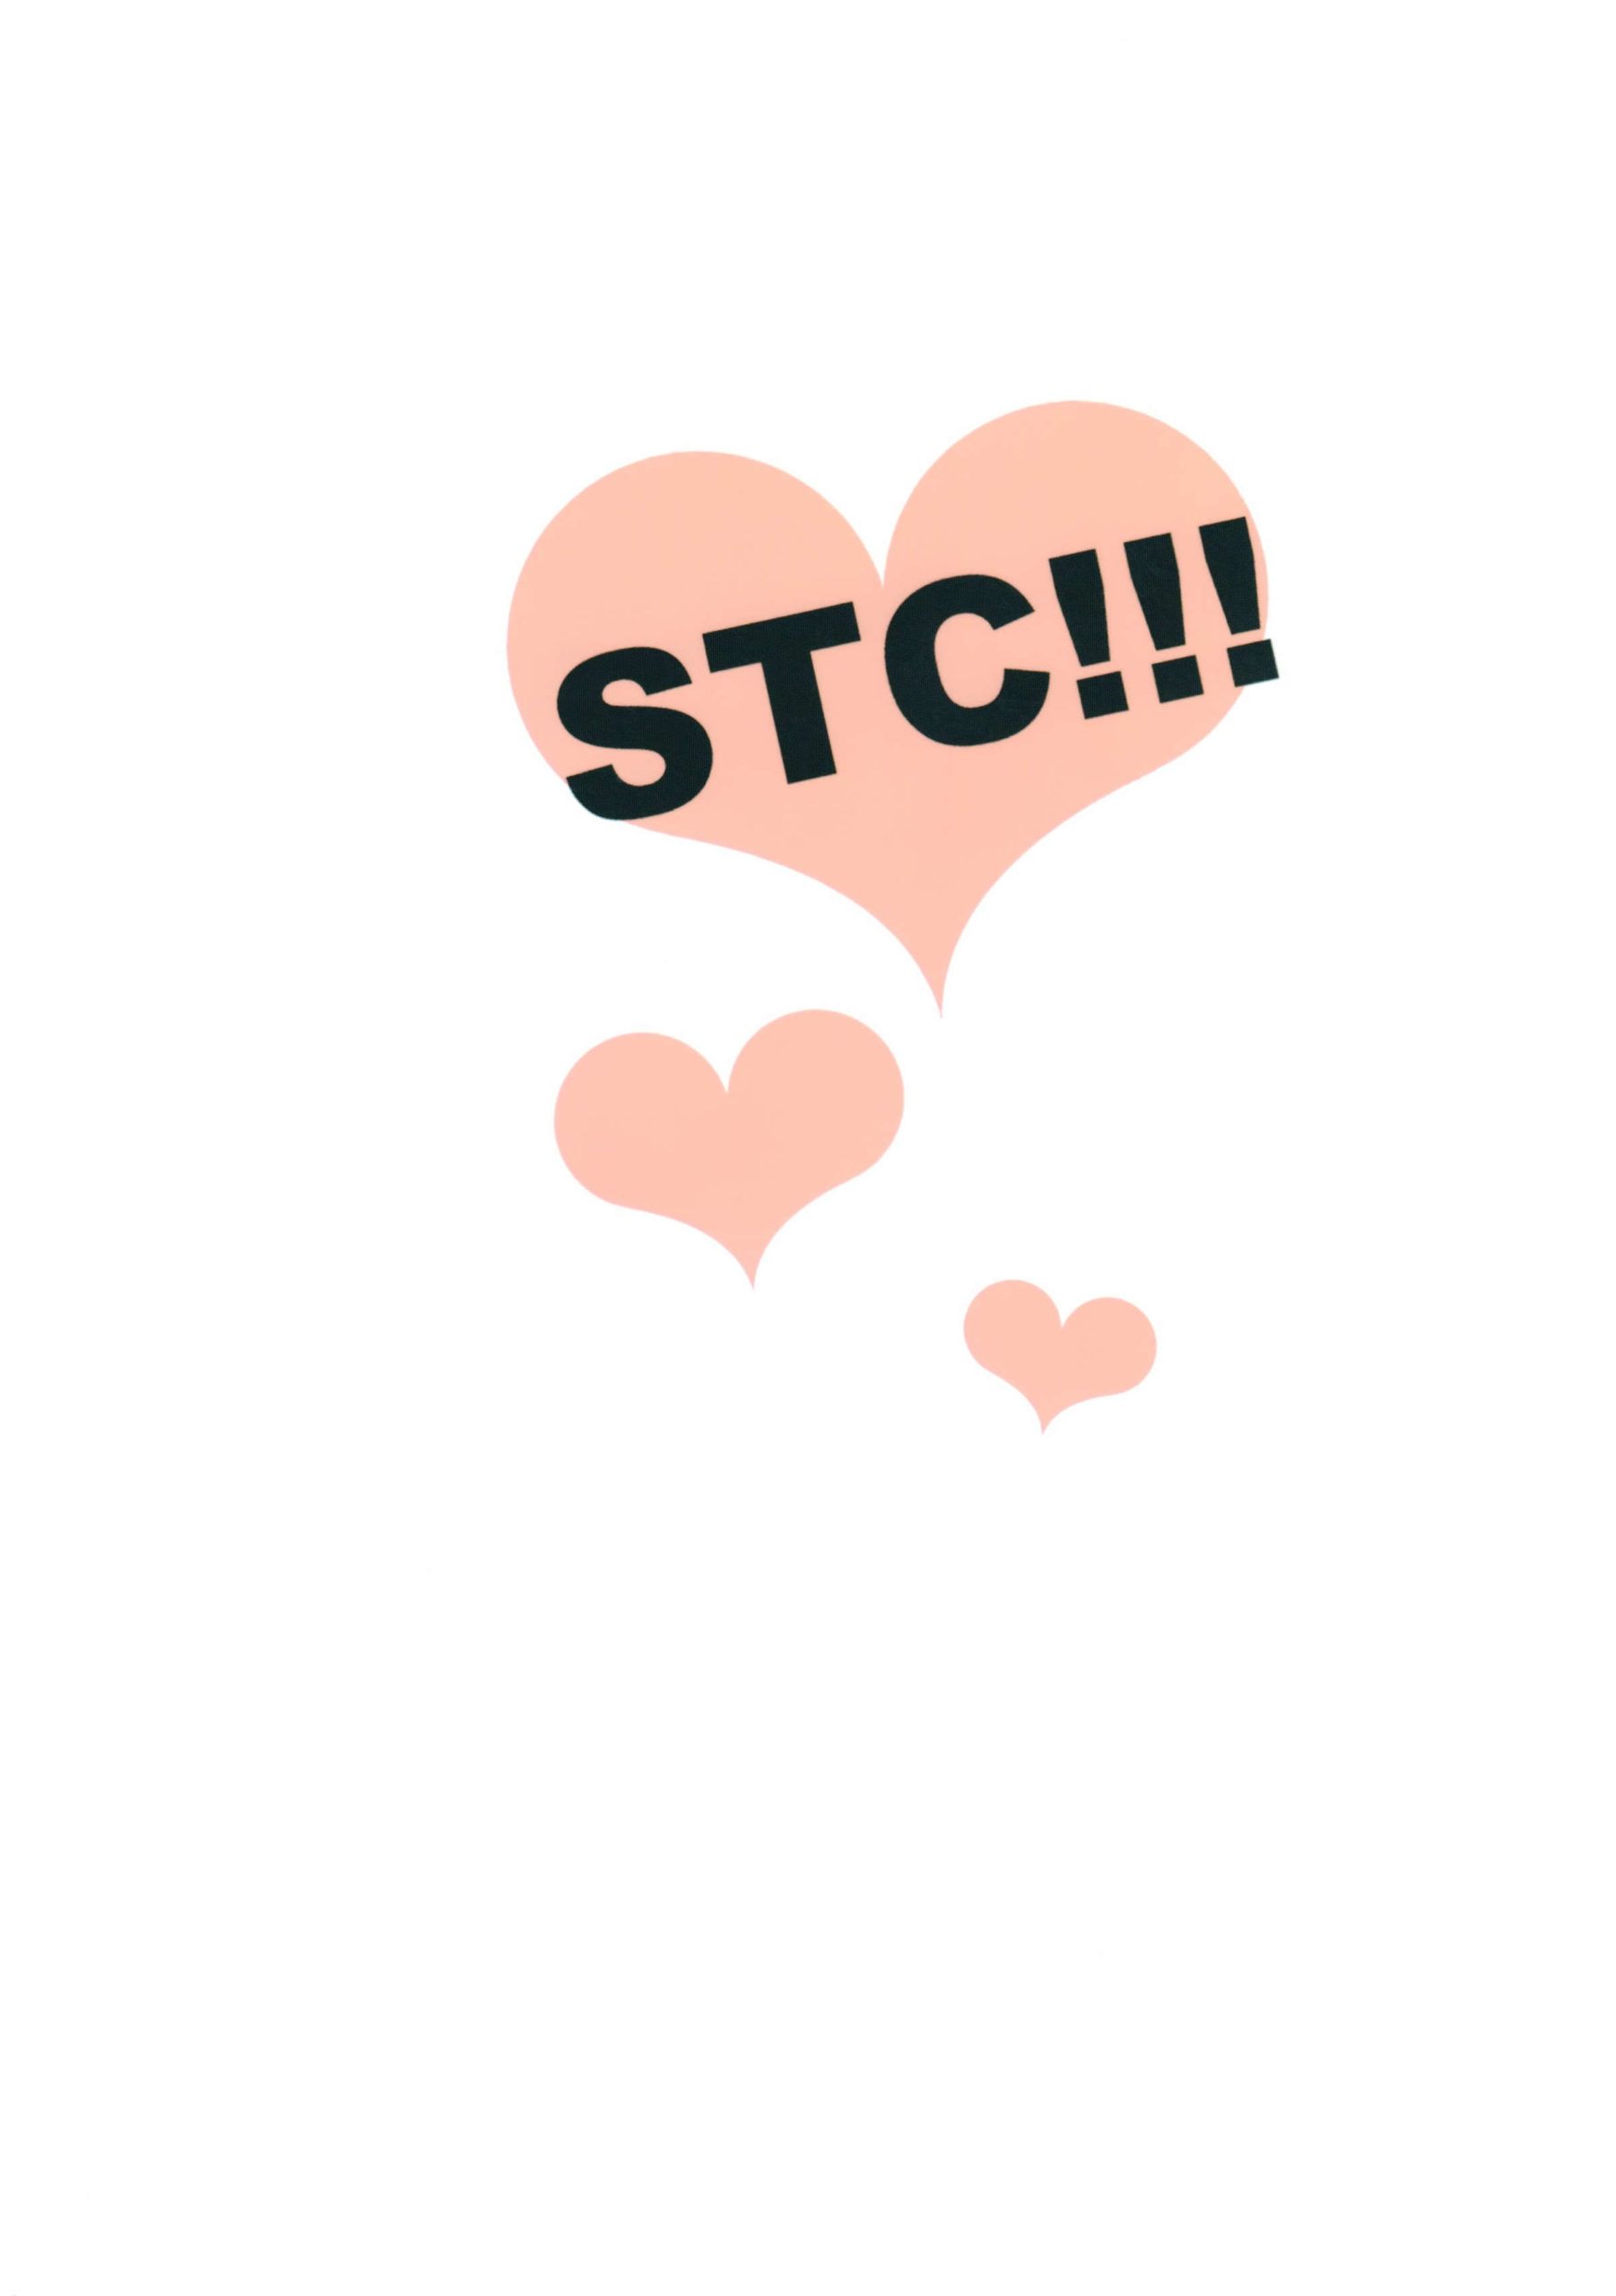 STC!!!